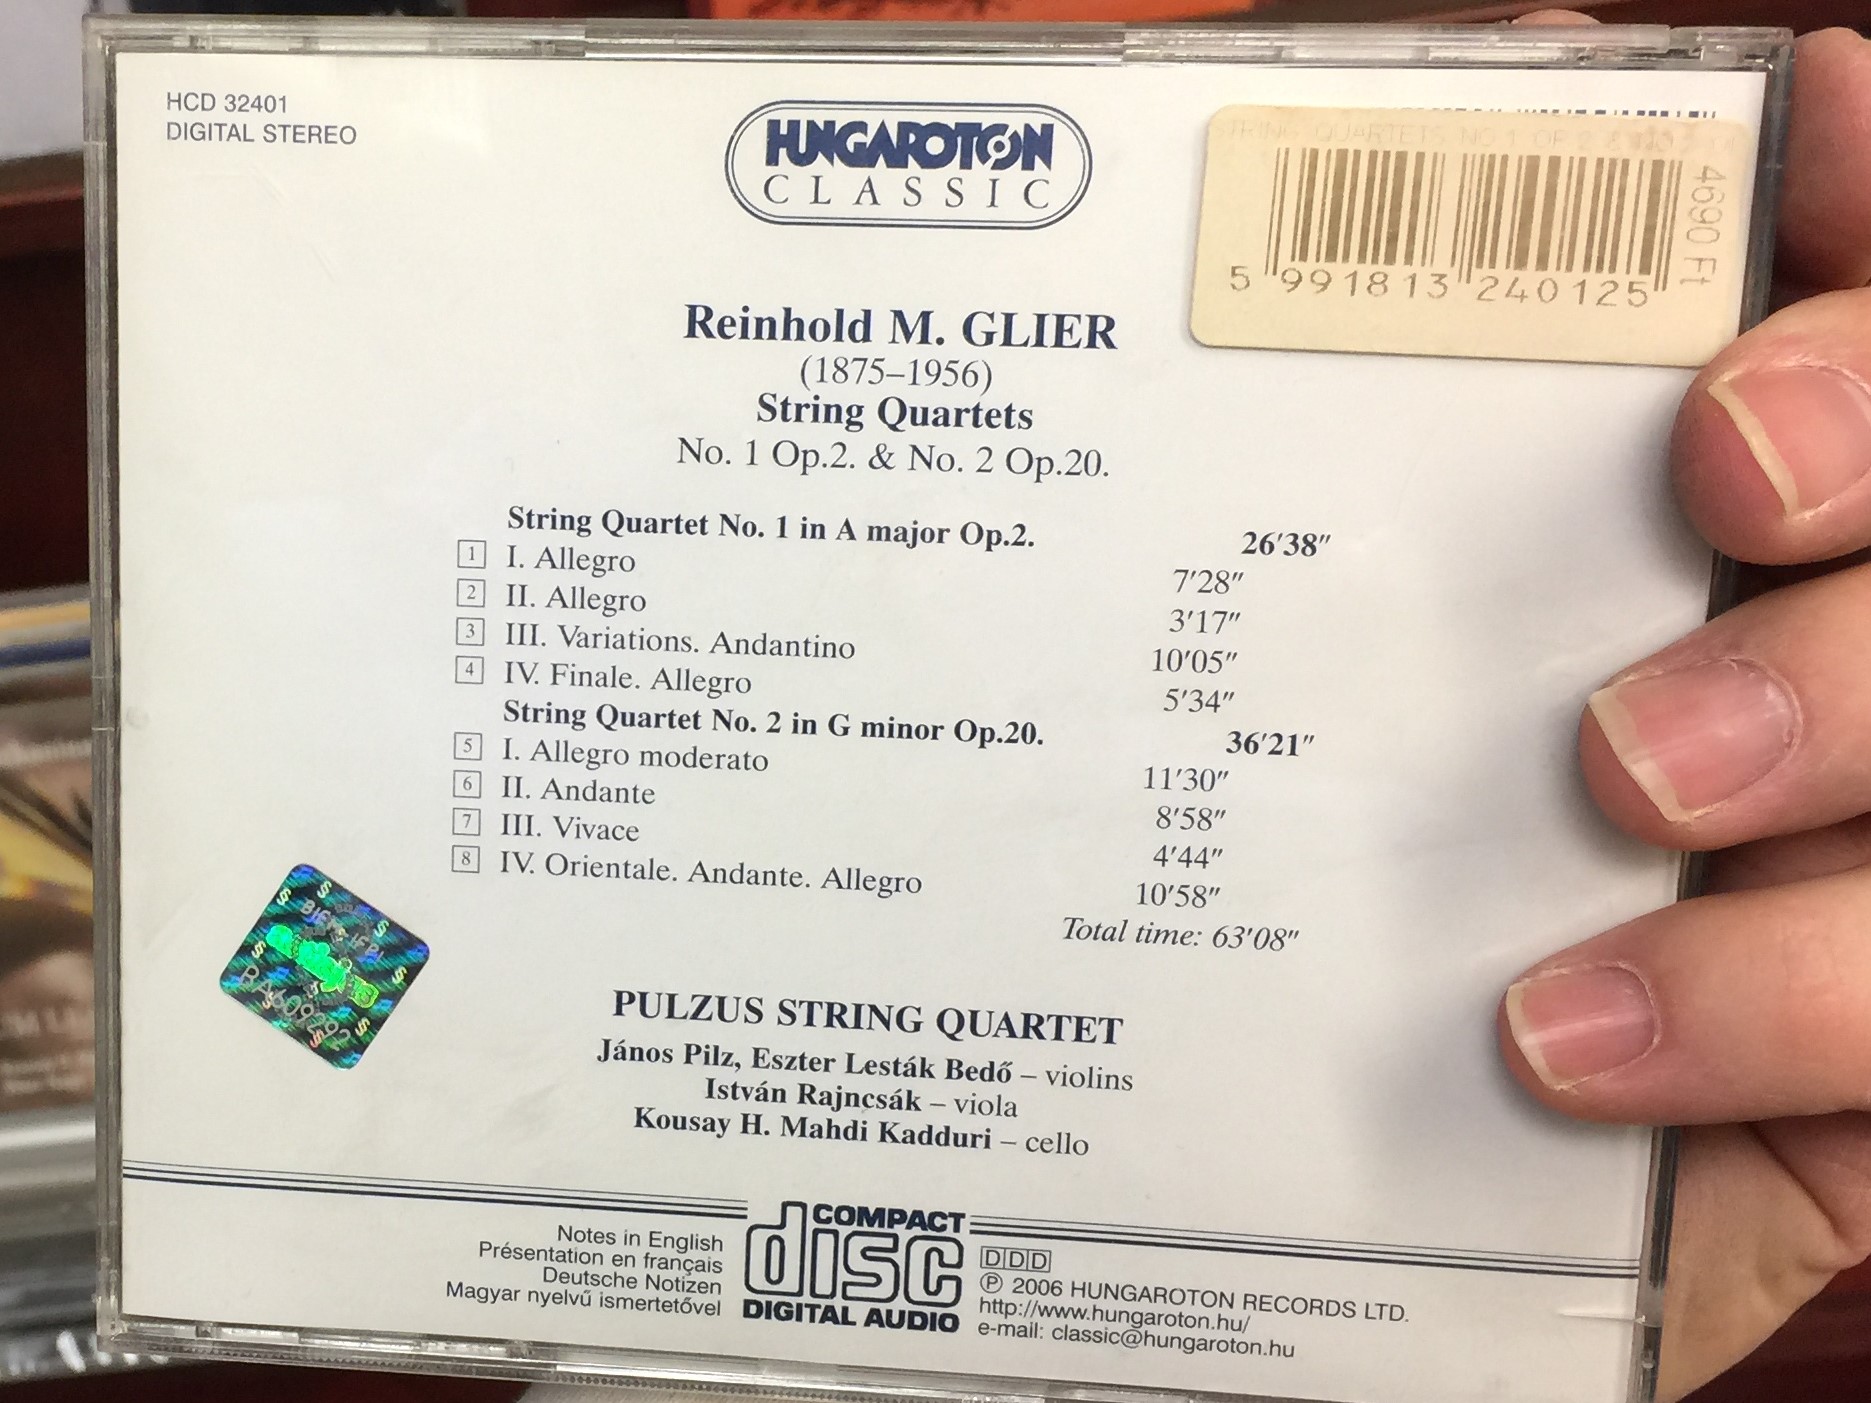 reinhold-glier-string-quartets-pulzus-string-quartet-hungaroton-classic-audio-cd-2006-stereo-hcd-32401-2-.jpg